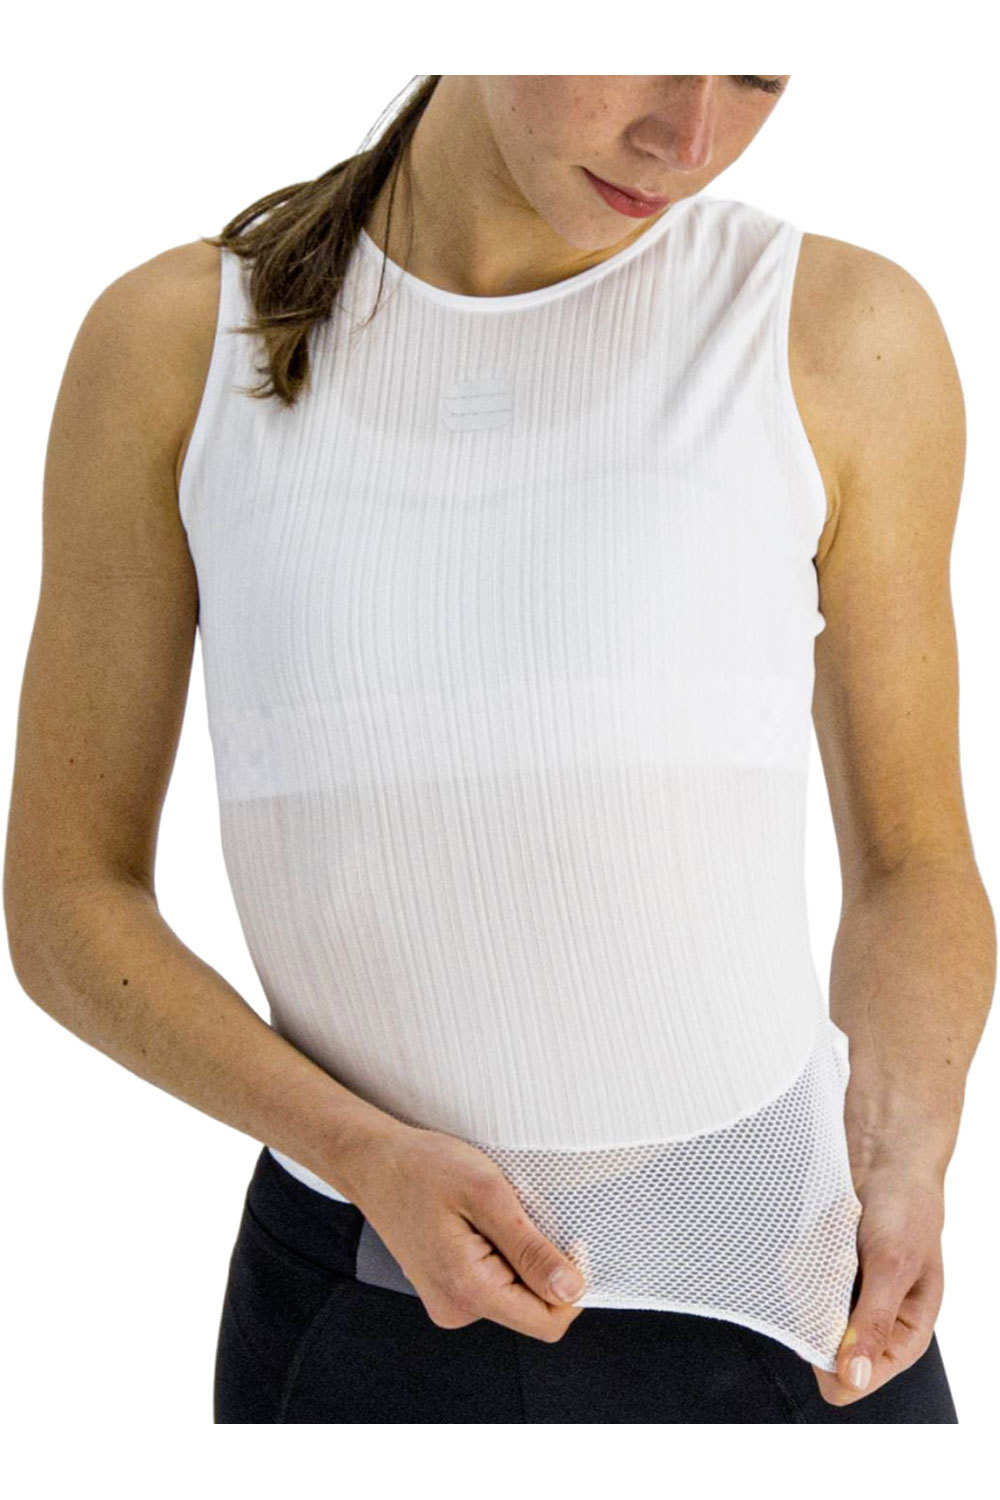 Sportful camiseta térmica mujer PRO BASELAYER W SLEEVELESS vista trasera